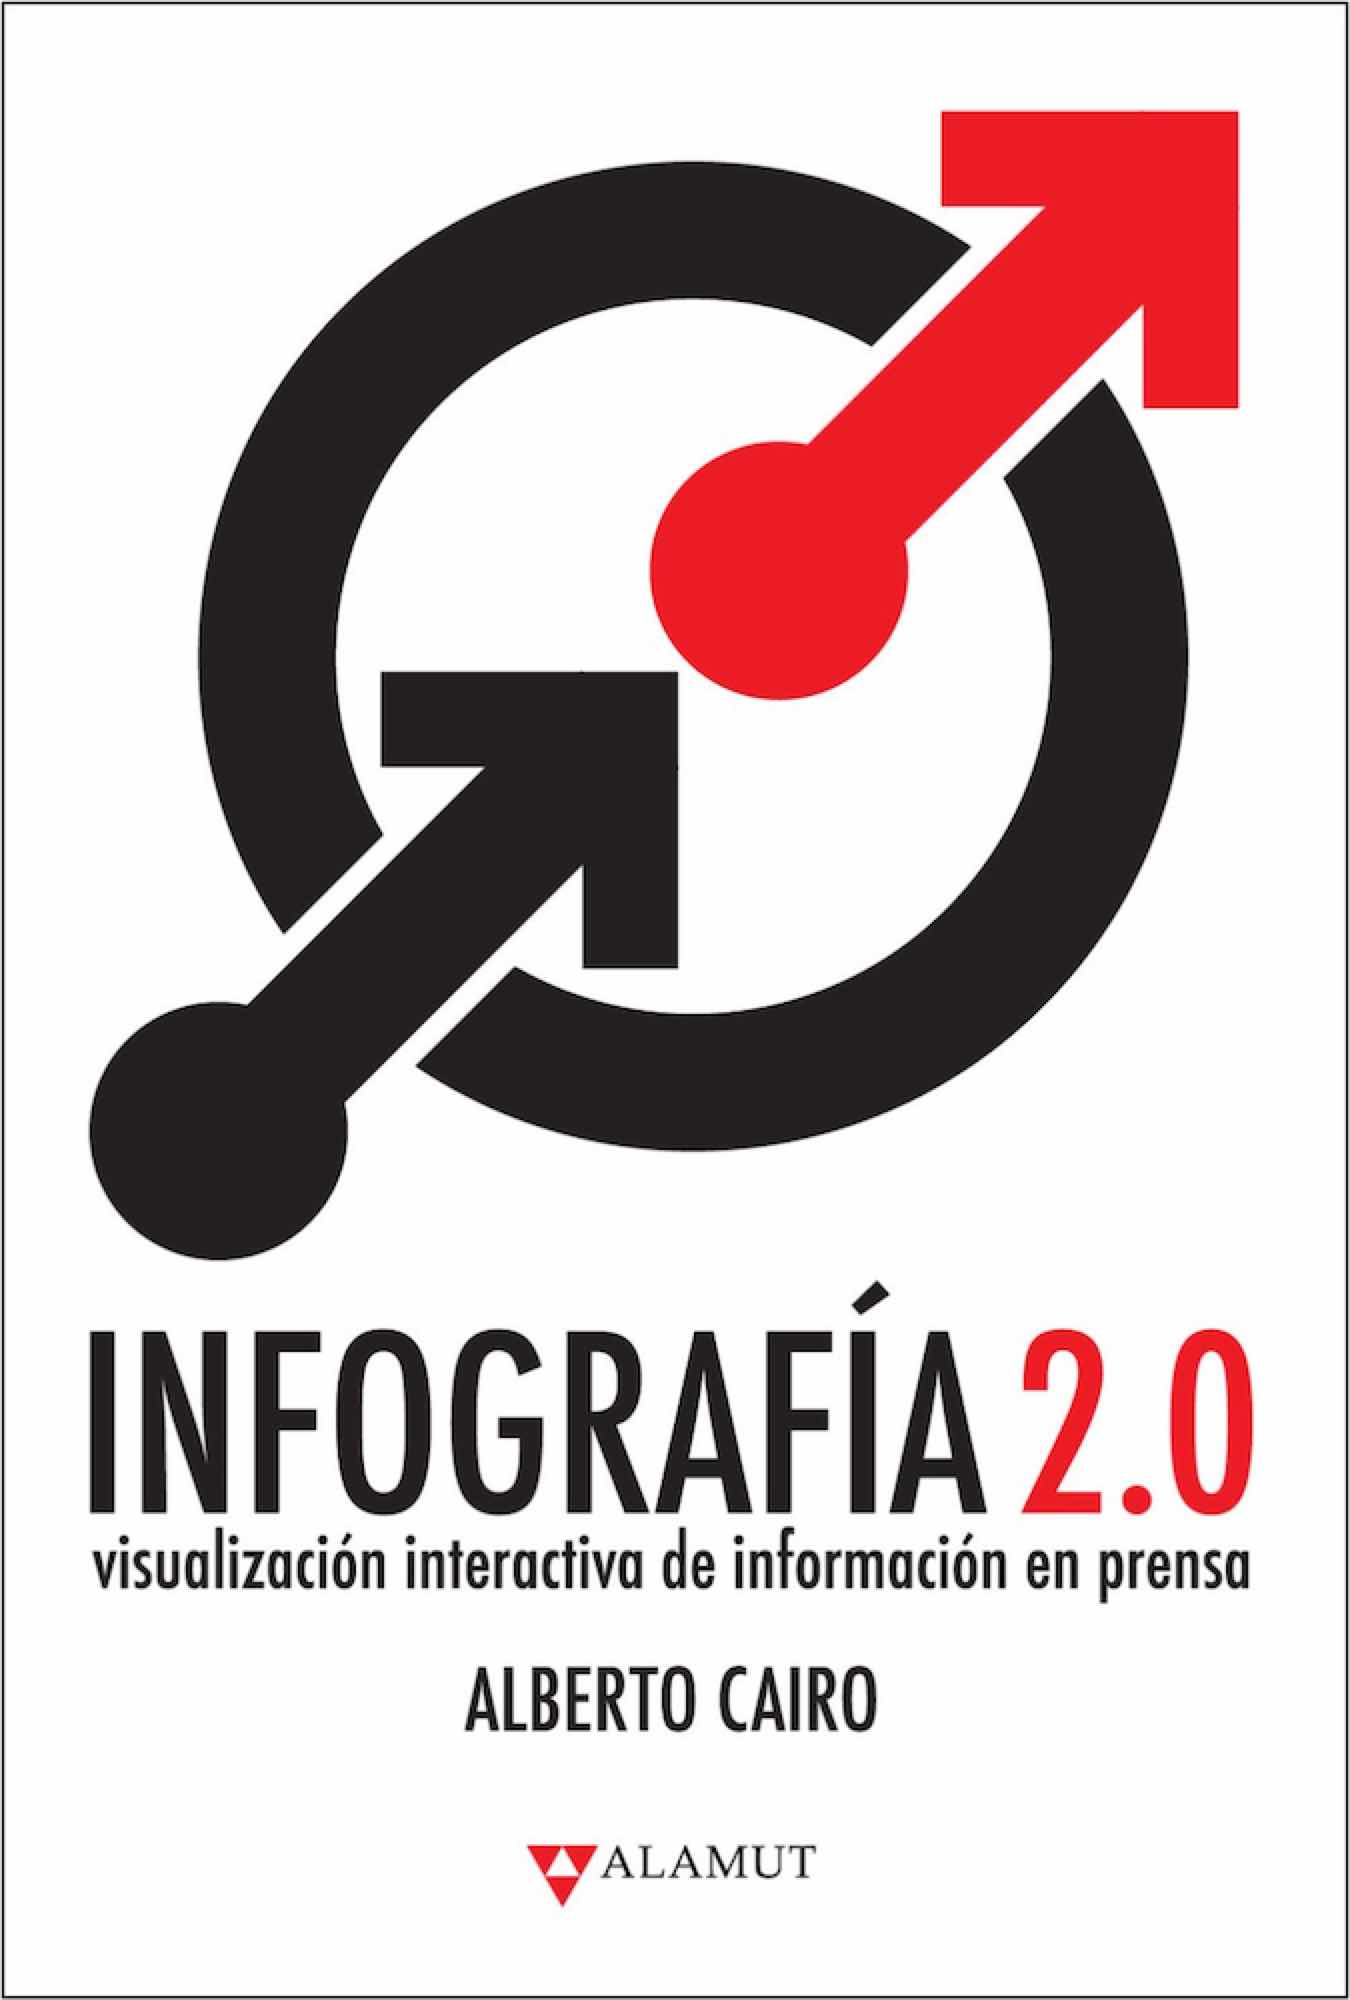 INFIGRAFIA 2.0 VISUALIZACION INTERACTIVA DE INFORMACION DE PRENSA